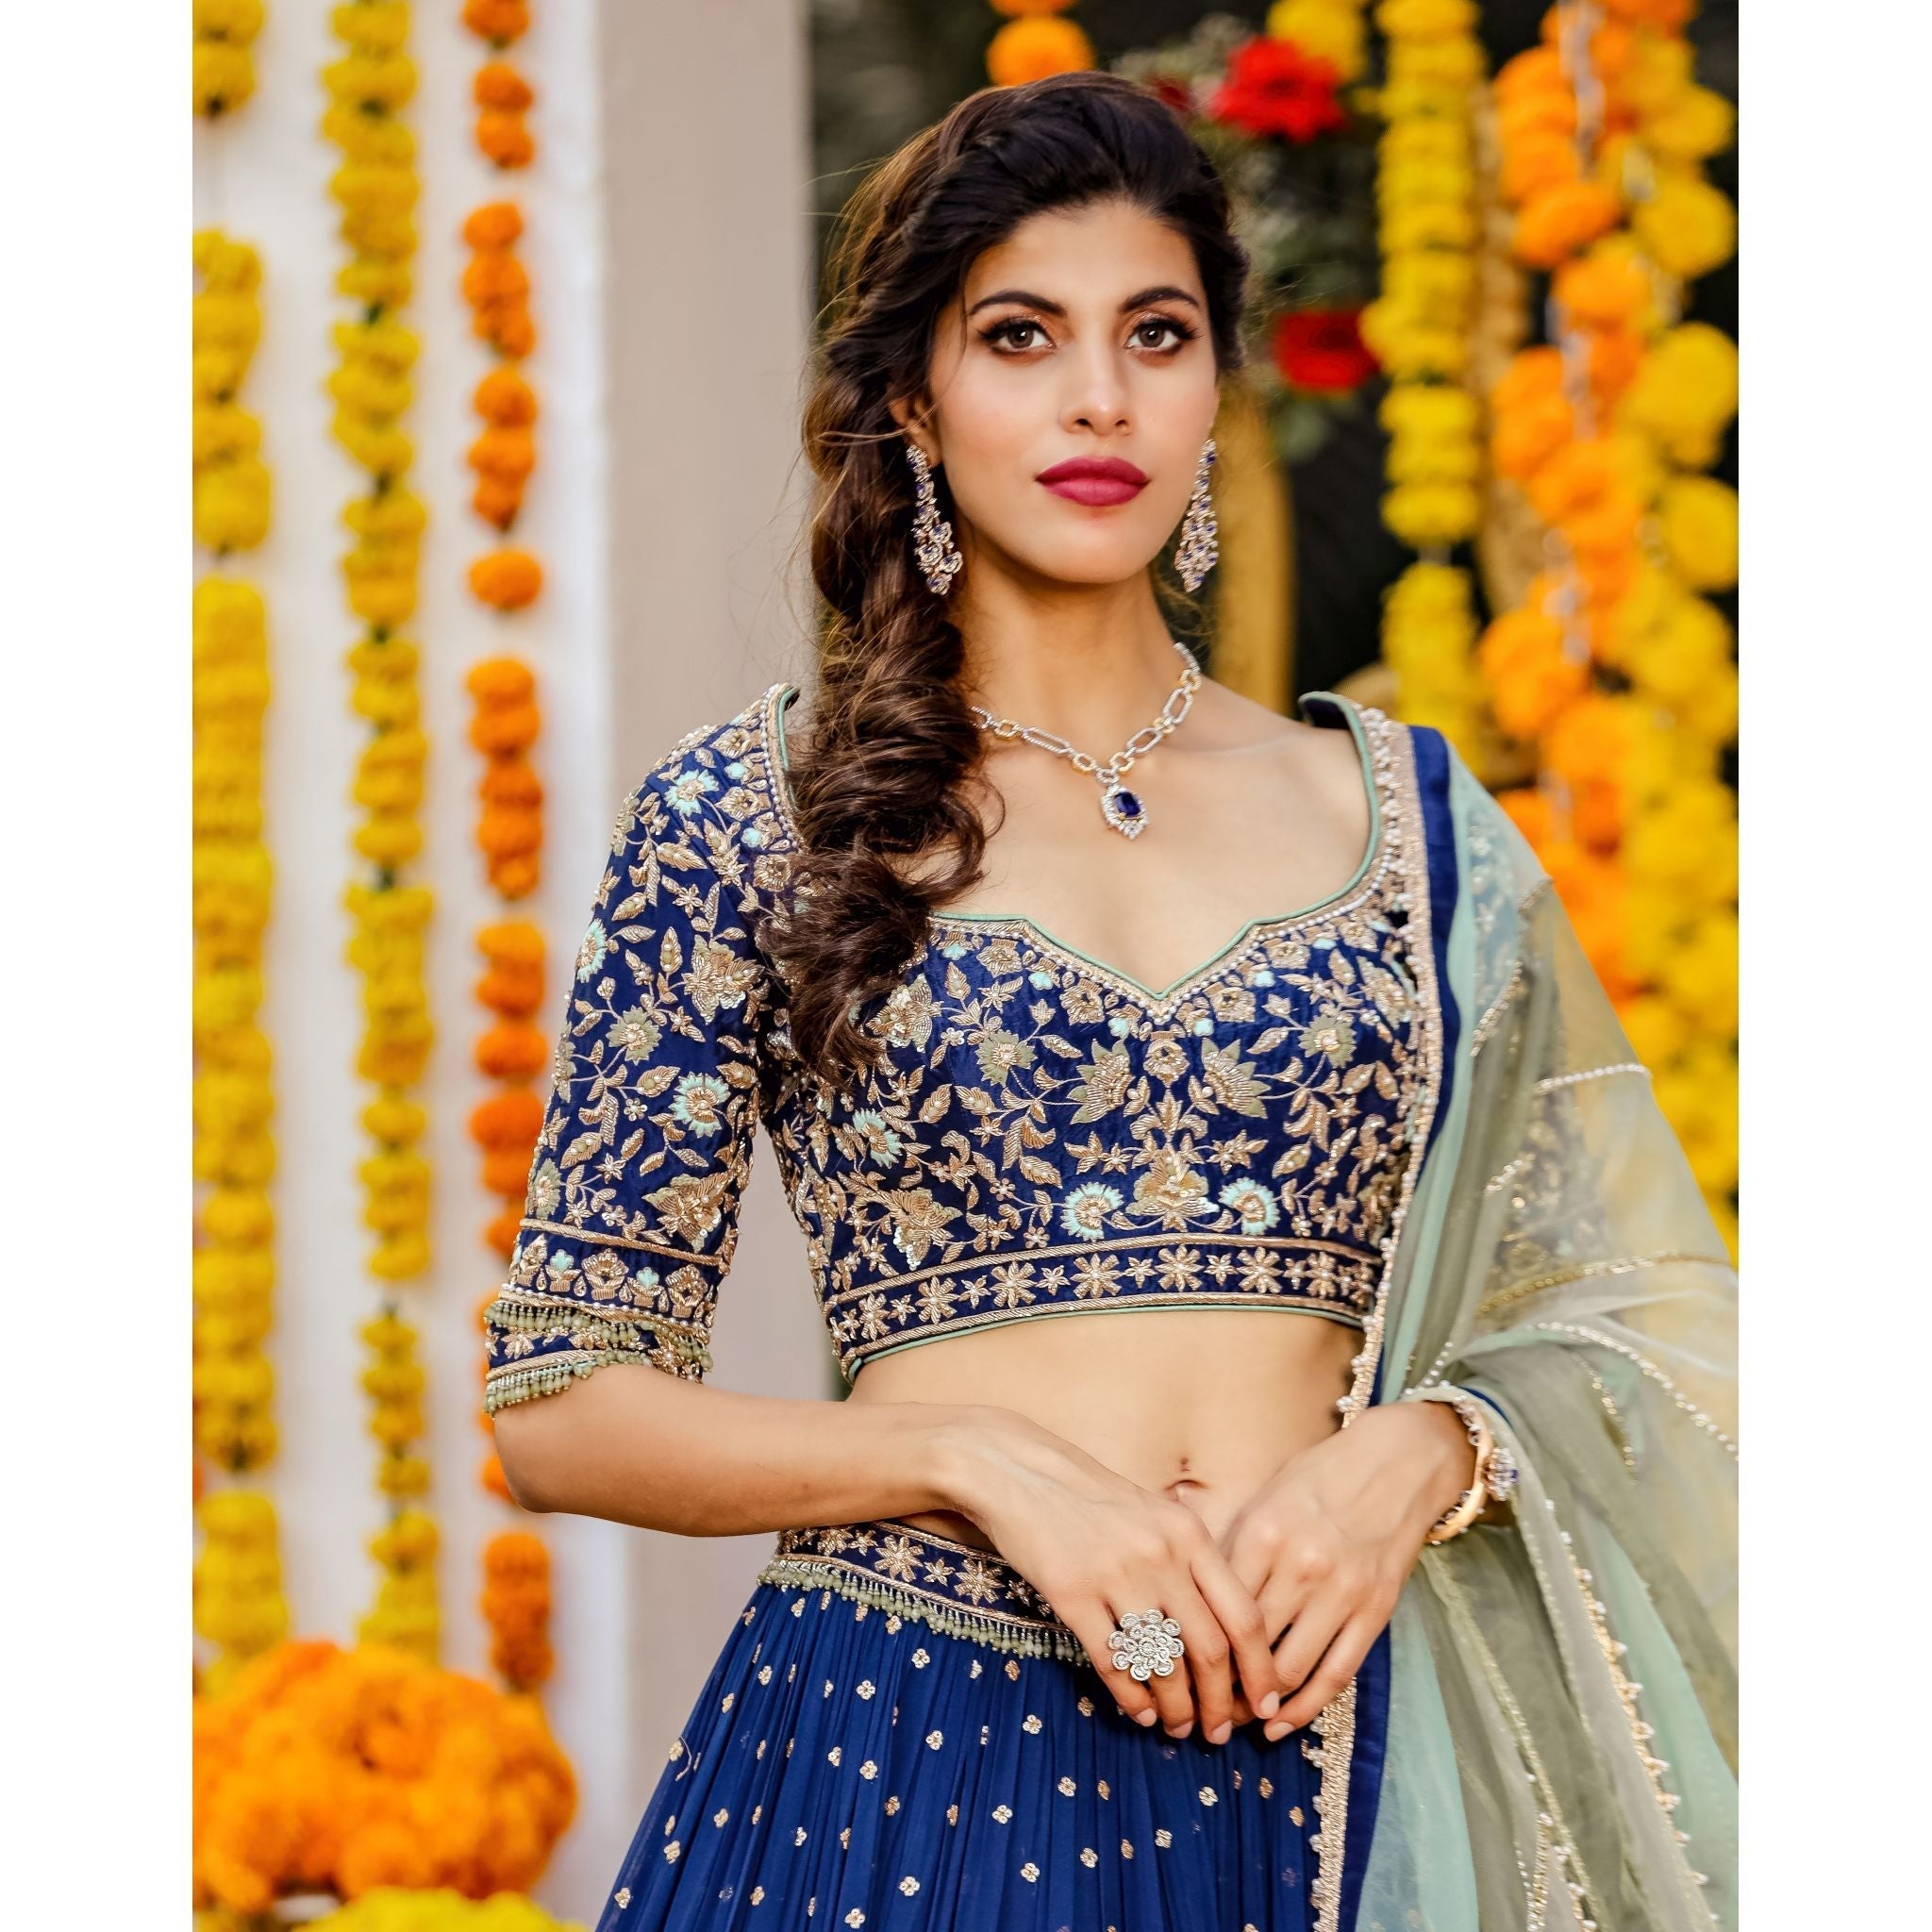 Sapphire And Mint Gold Lehenga Set - Indian Designer Bridal Wedding Outfit